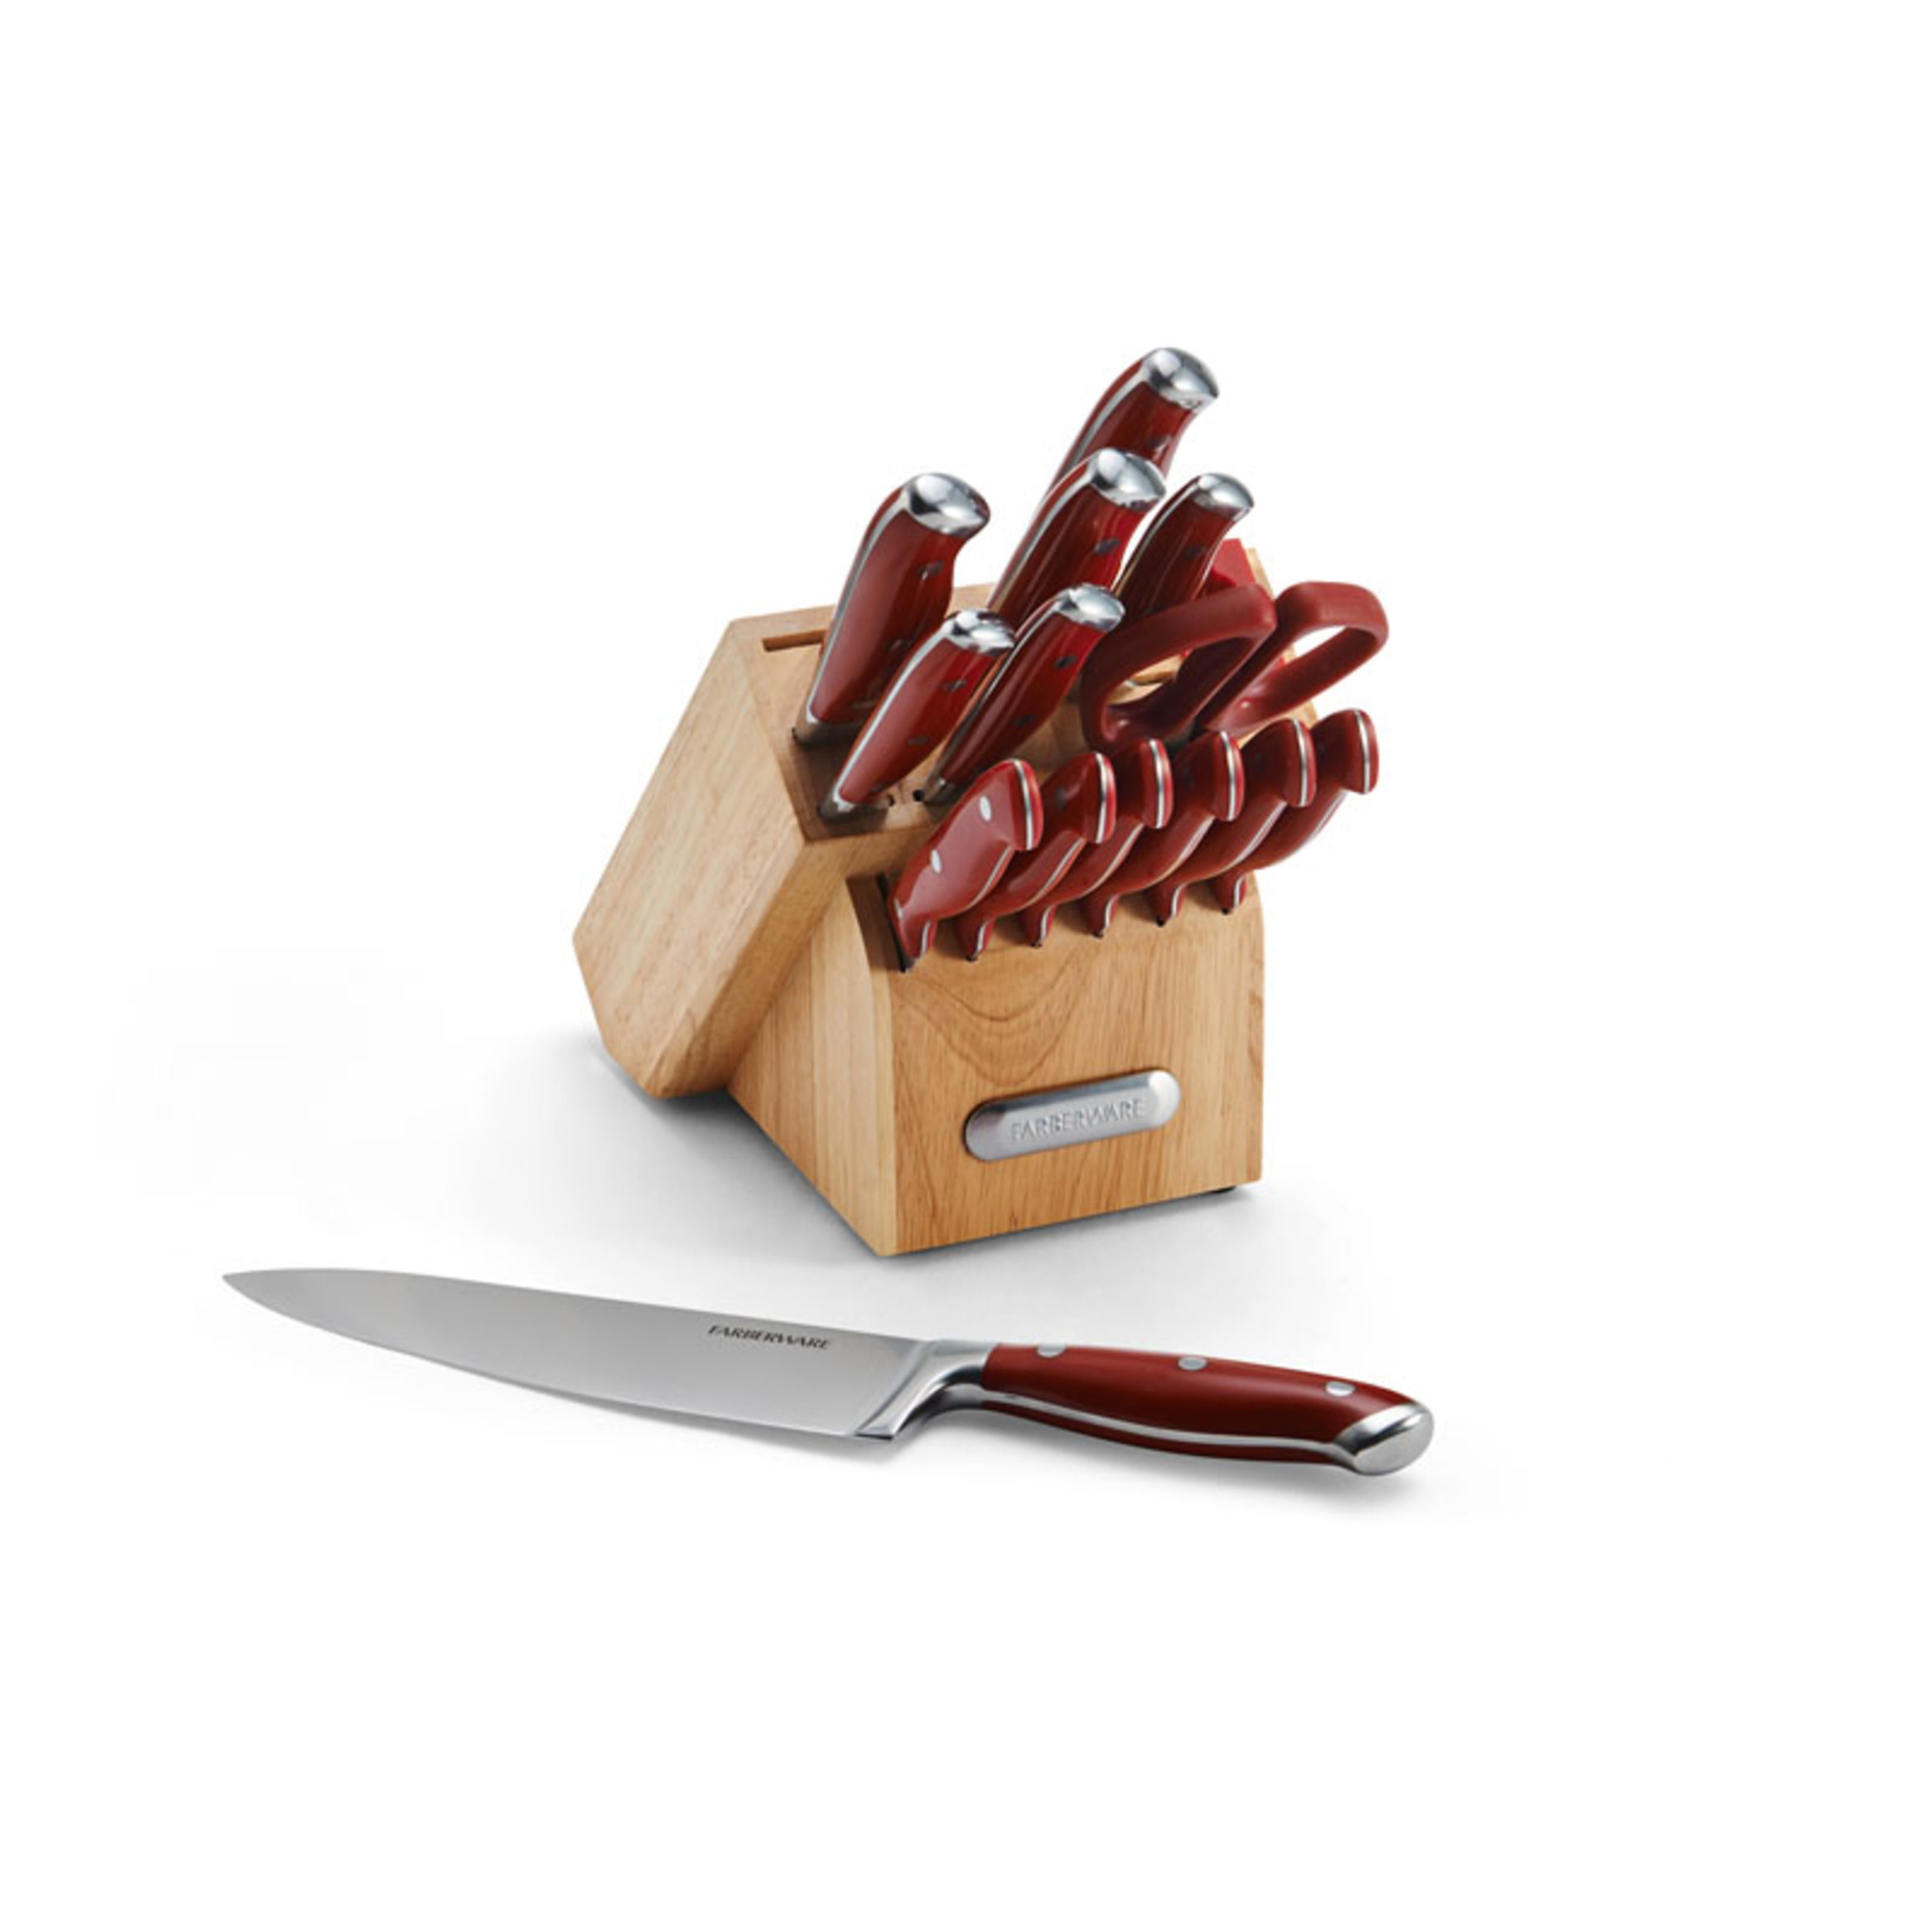 Farberware Edgekeeper Professional 15-piece Forged Triple Riveted Knife Block Set with Built-in Edgekeeper® - 1